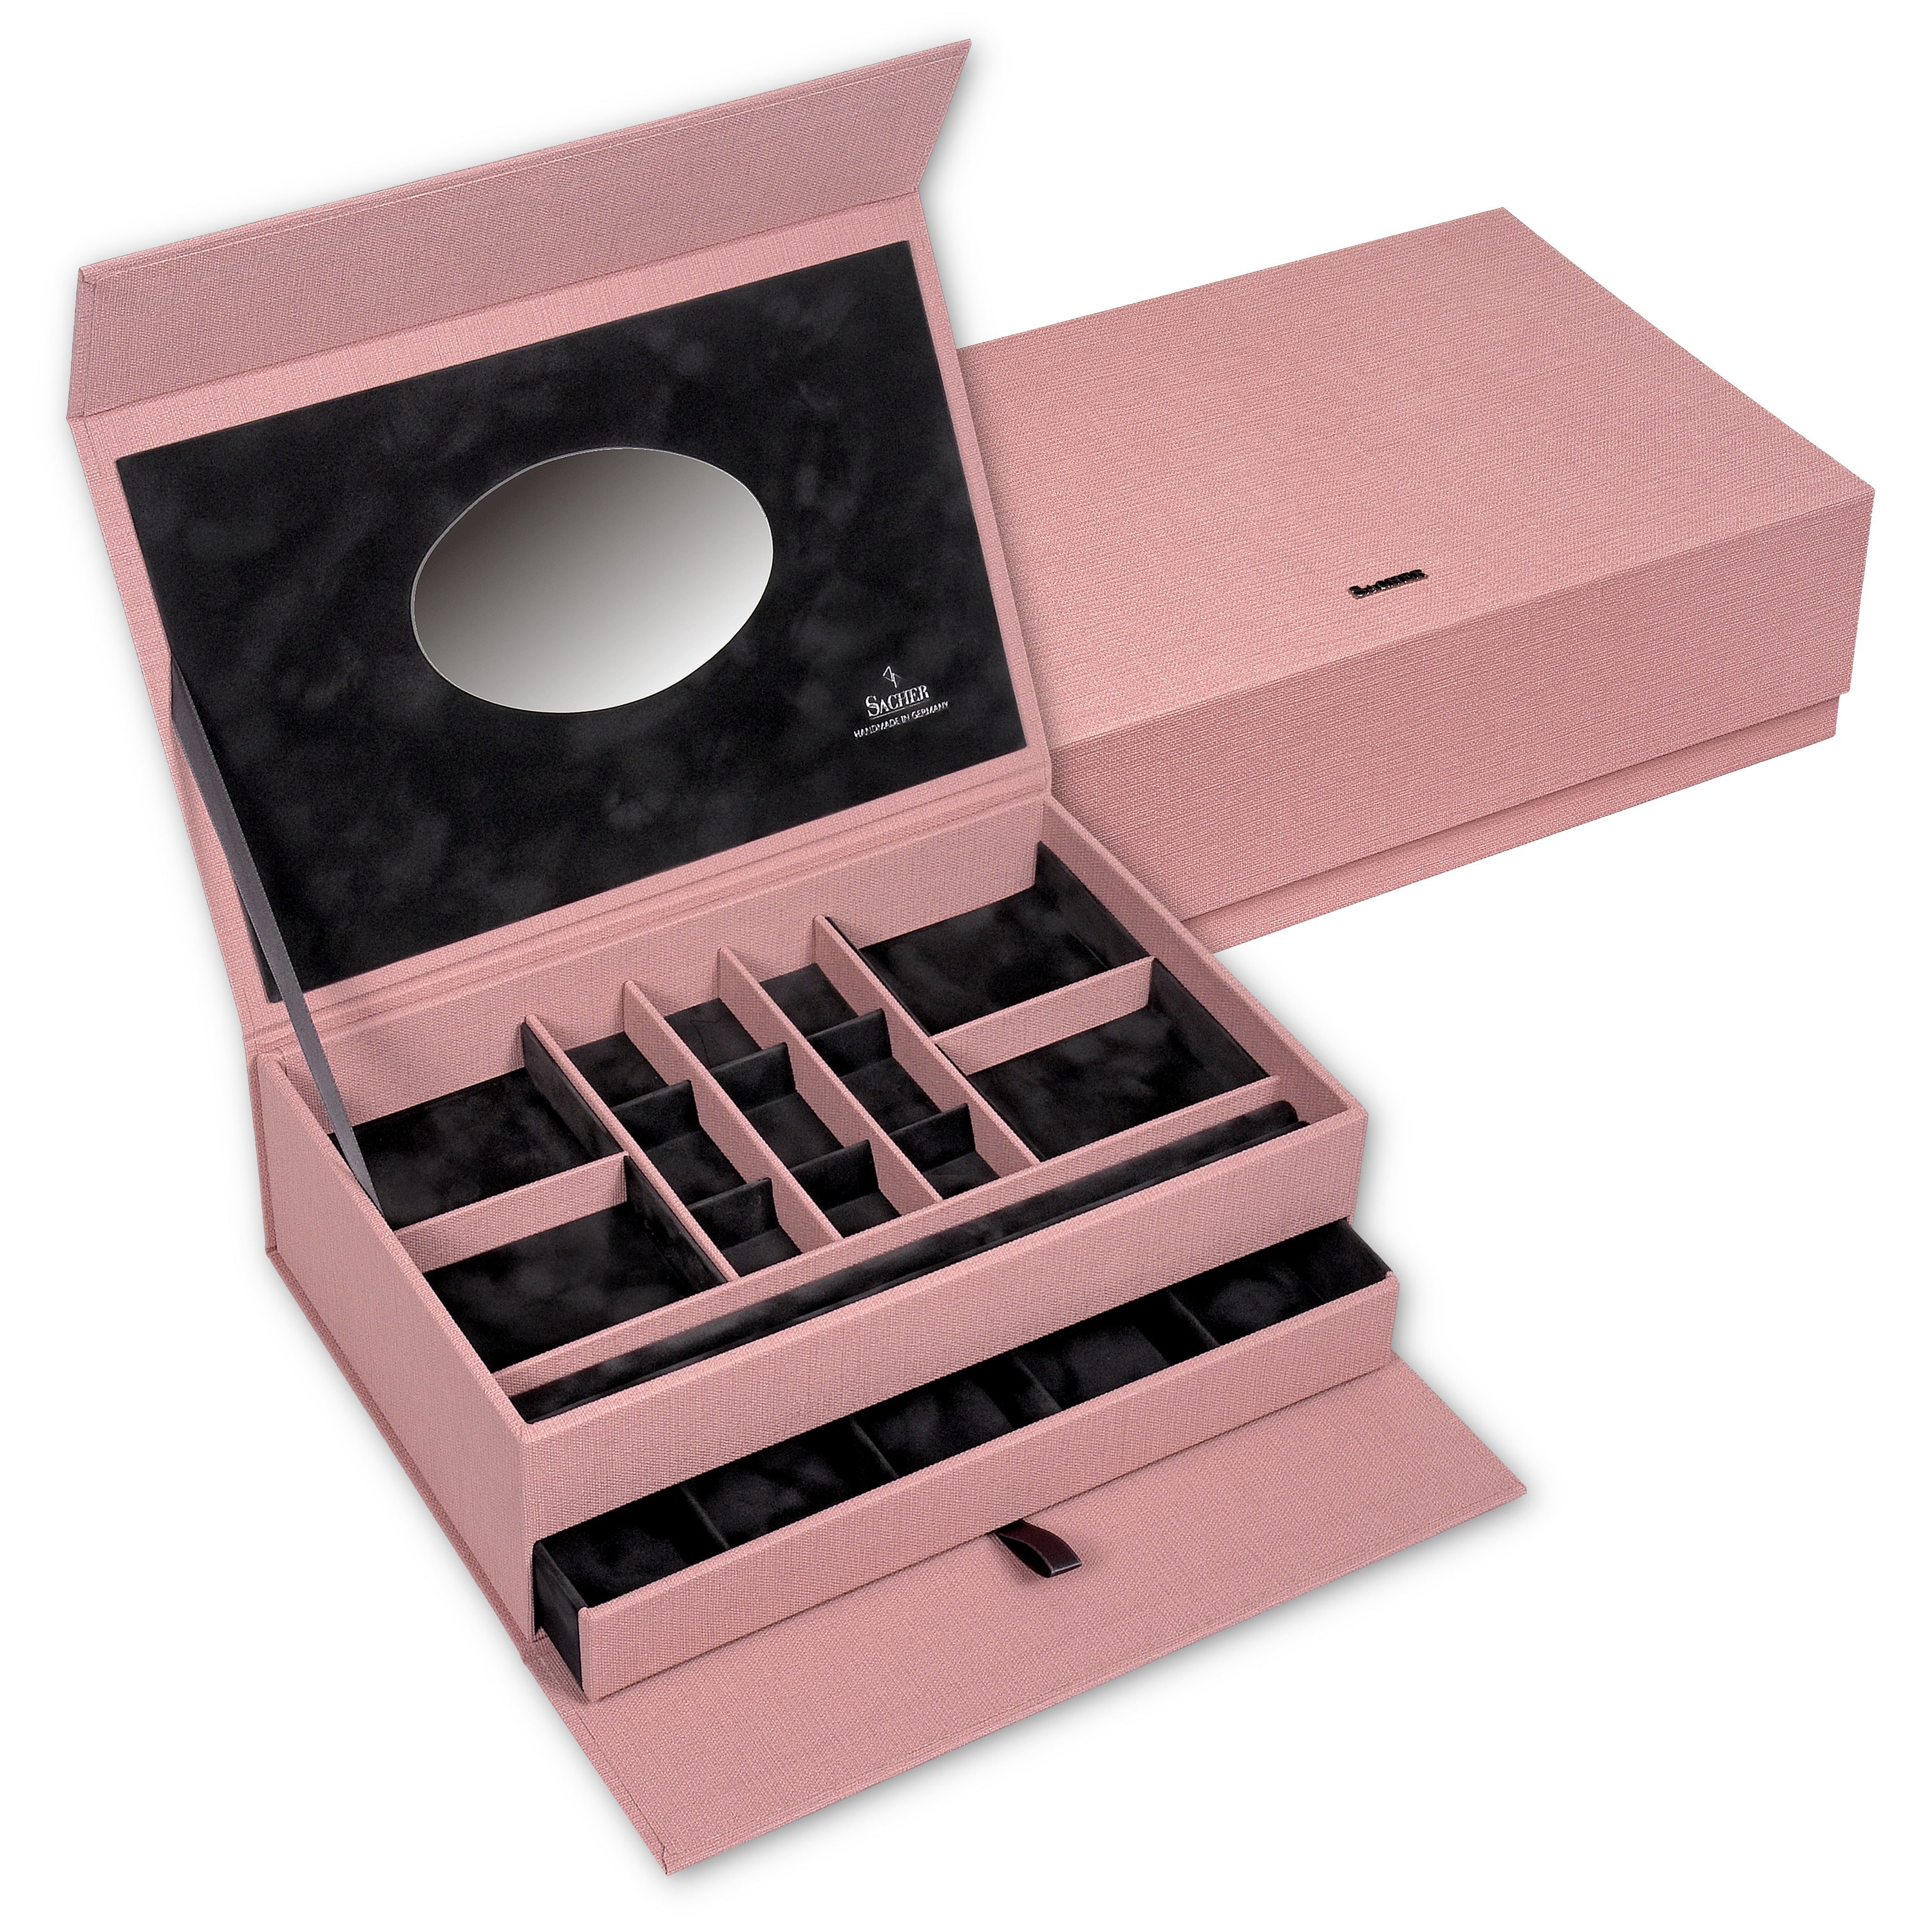 Schmuckbox pastello / rosa – Manufaktur SACHER 1846 | Offizieller Store